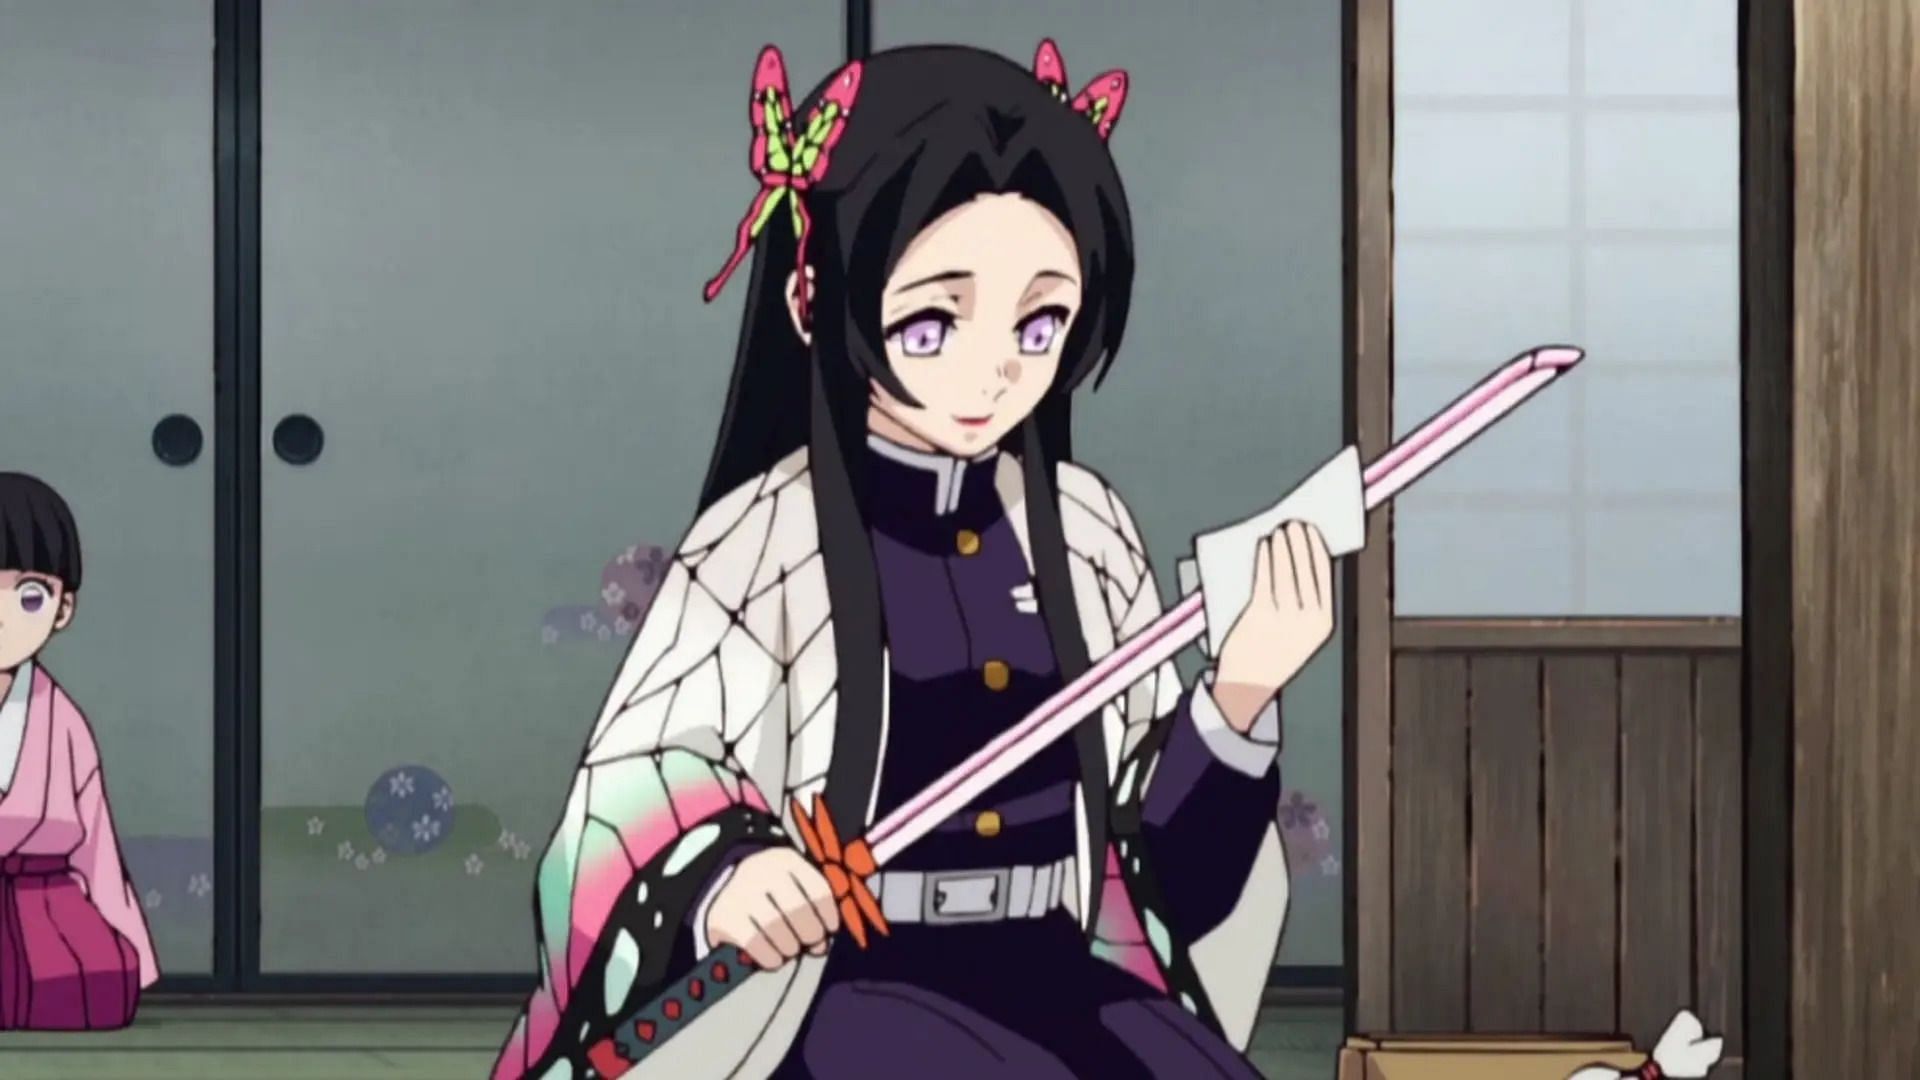 Kanae Kocho as seen in the anime series (Image via Ufotable)